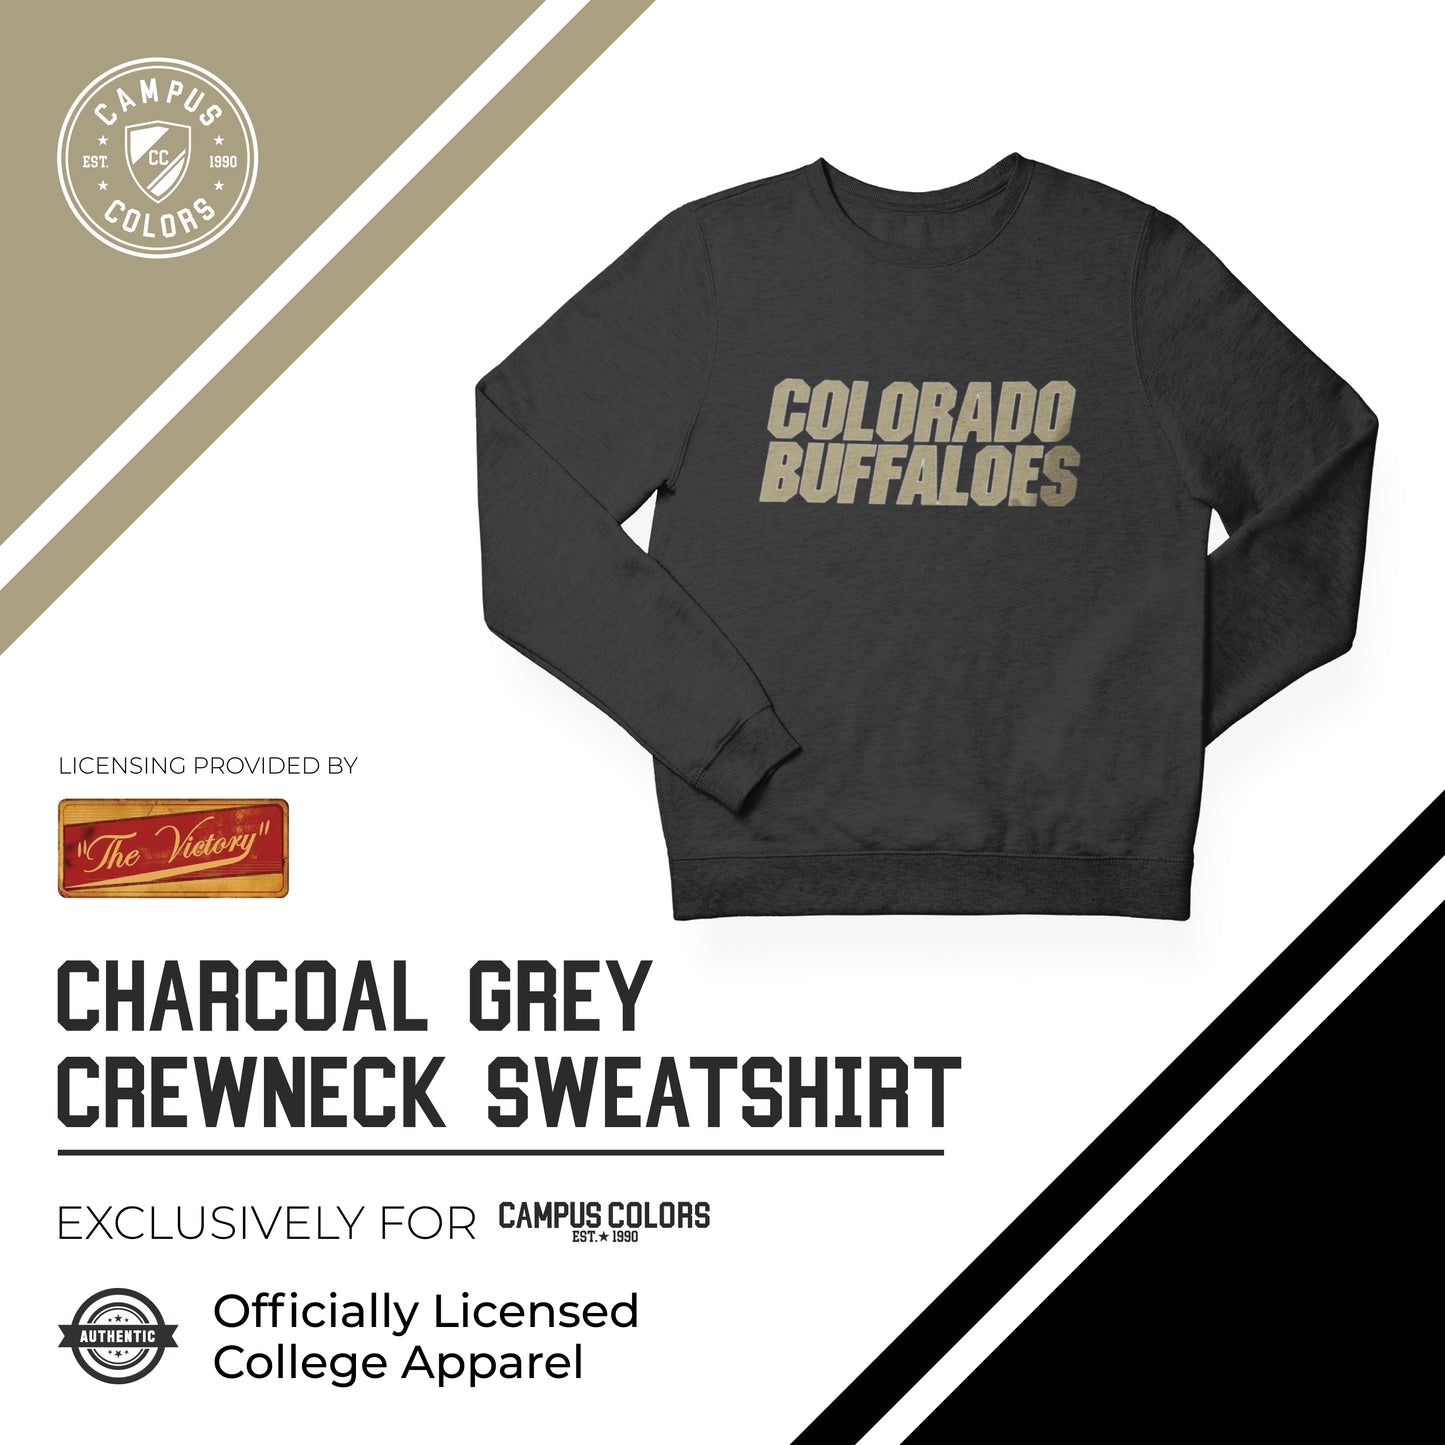 Colorado Buffaloes NCAA Adult Charcoal Crewneck Fleece Sweatshirt - Charcoal